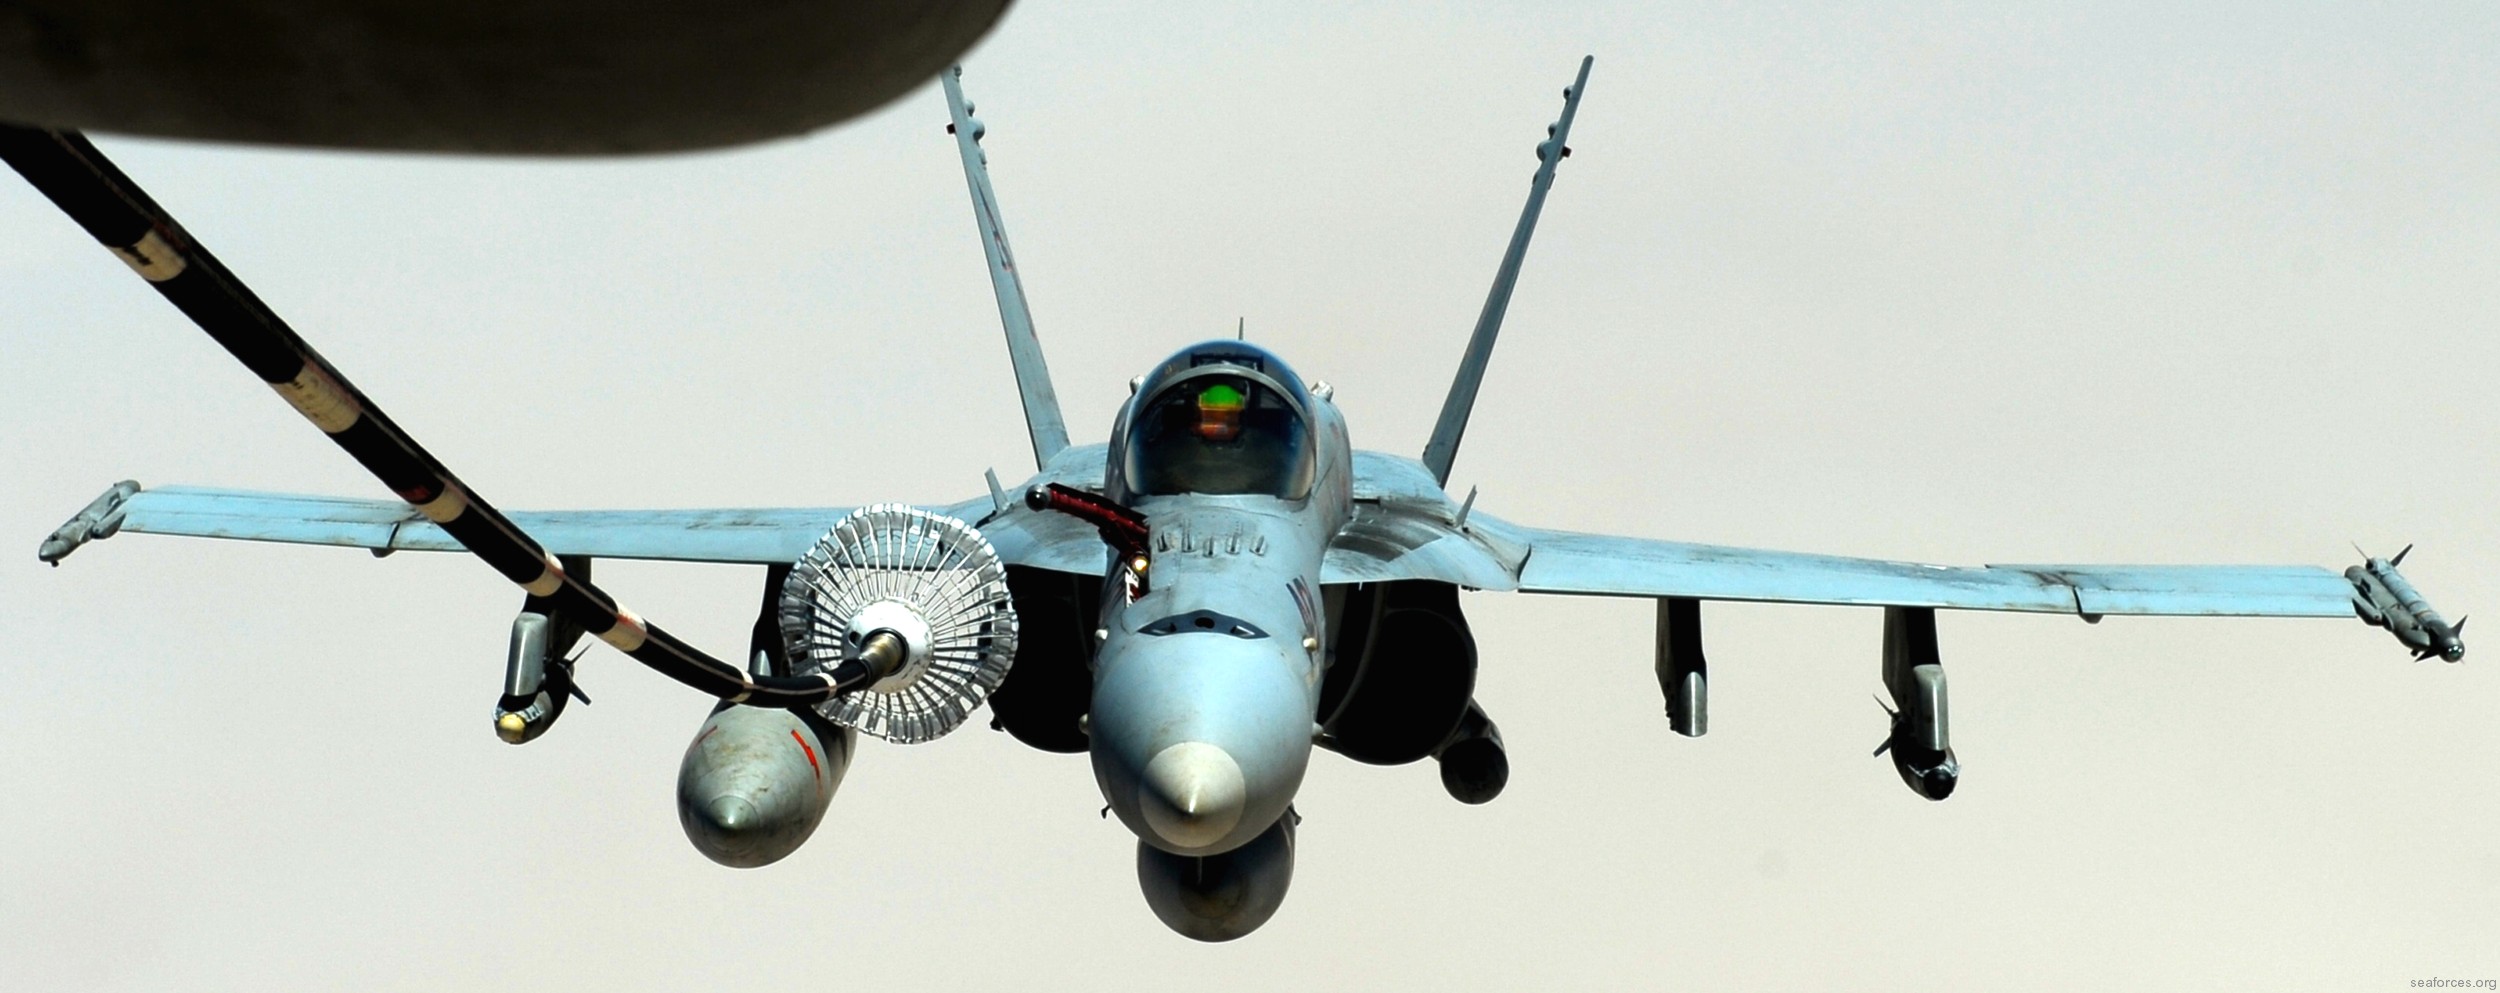 vmfa-251 thunderbolts marine fighter attack squadron f/a-18c hornet cvw-1 uss enterprise cvn-65 153